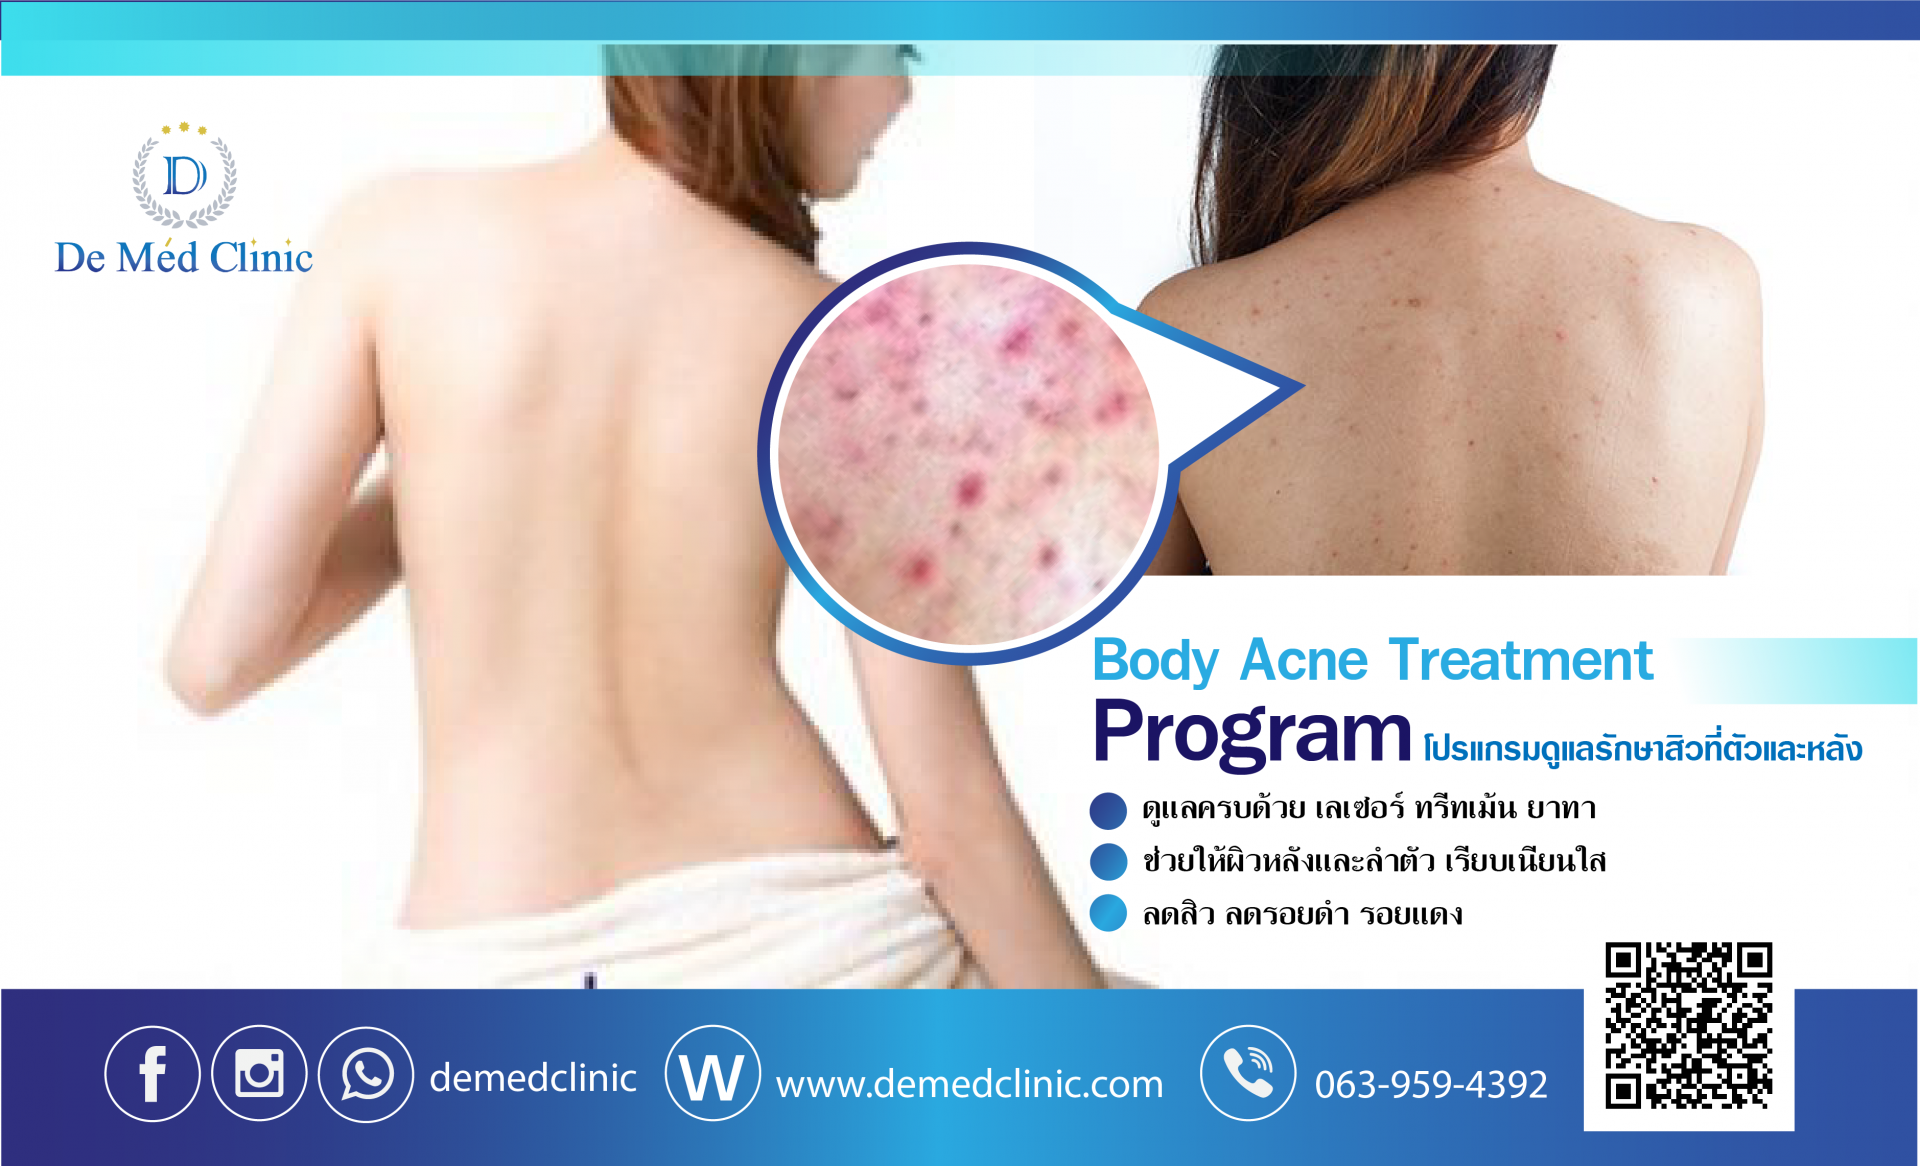 Body Acne Treatment Program by De Med Clinic โปรแกรมดูแลรักษาสิวที่ชำตัวและหลัง